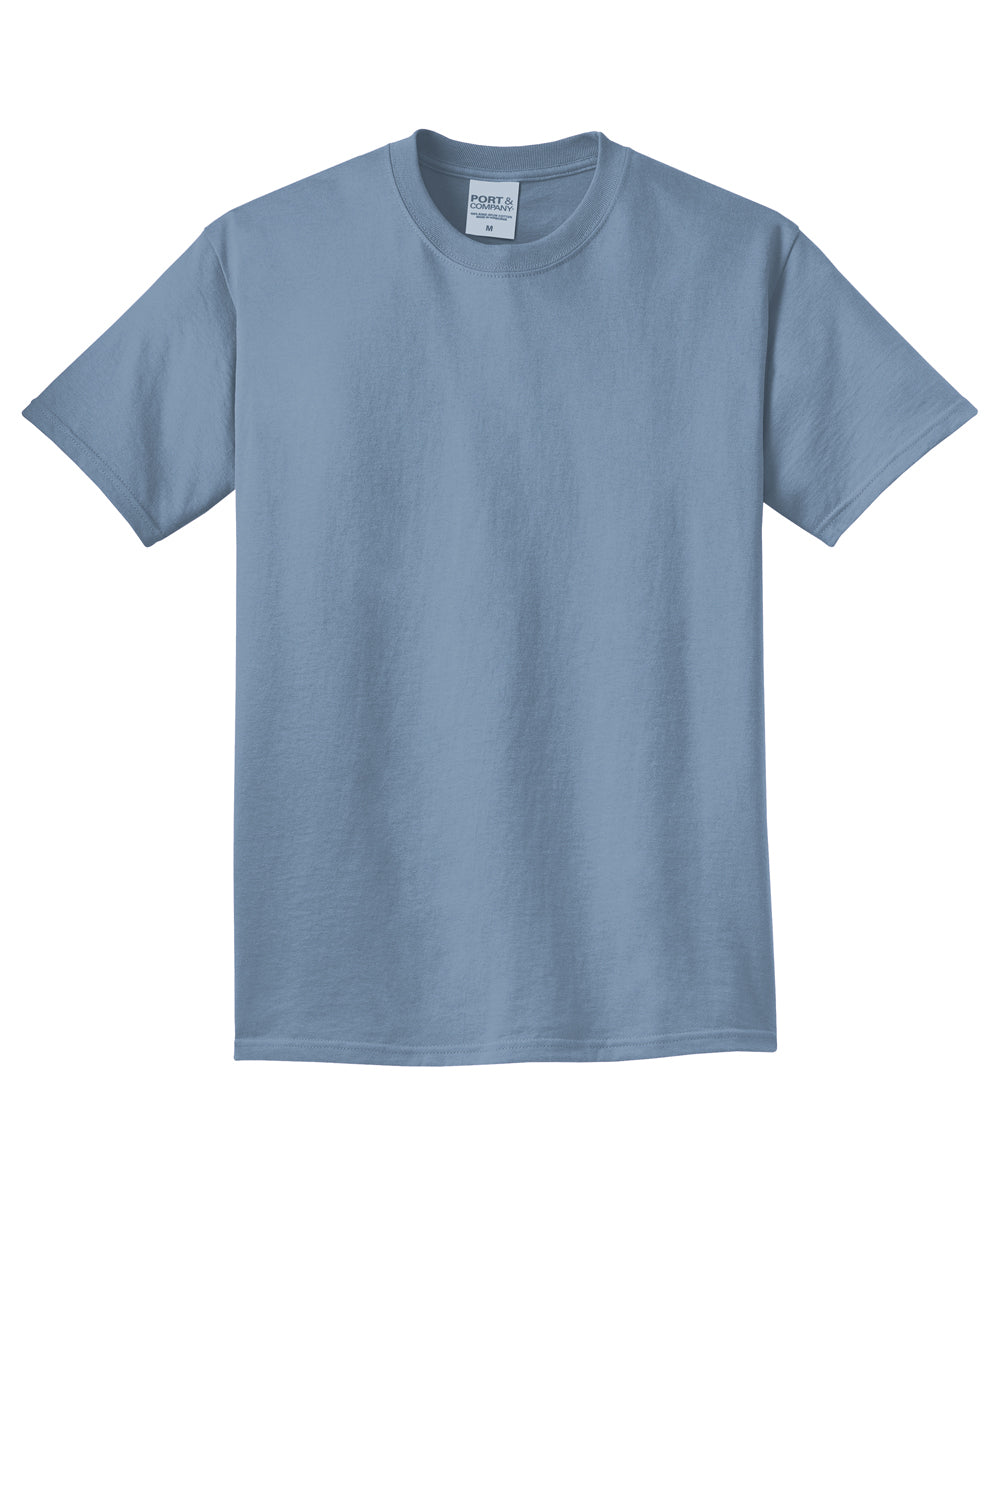 Port & Company PC099 Mens Beach Wash Short Sleeve Crewneck T-Shirt Faded Denim Blue Flat Front